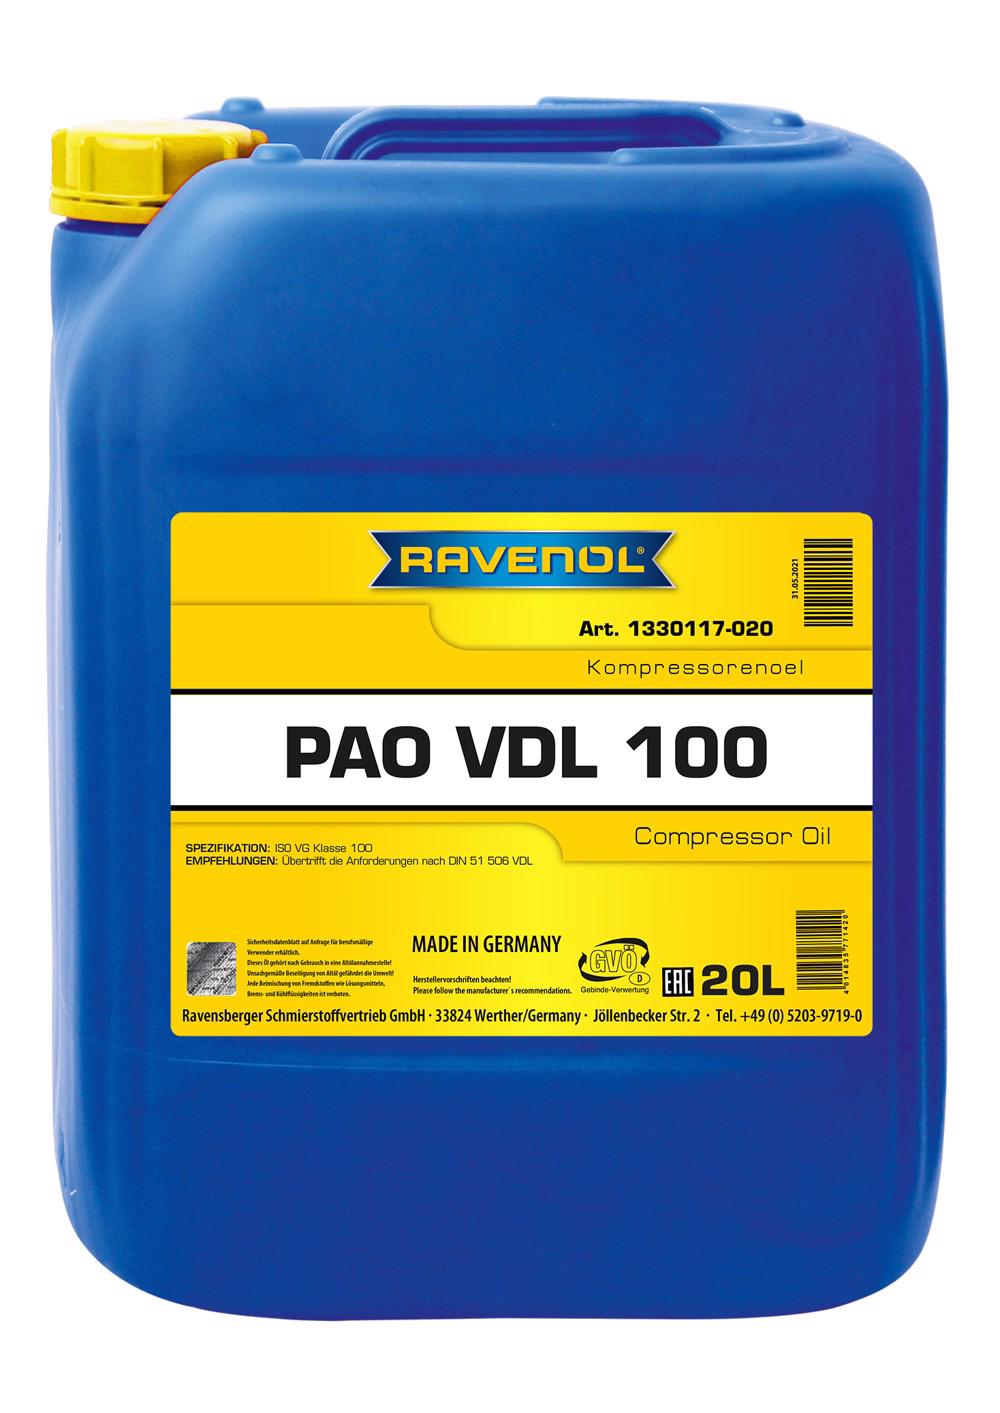 RAVENOL Kompressorenoel PAO VDL 100  20 L